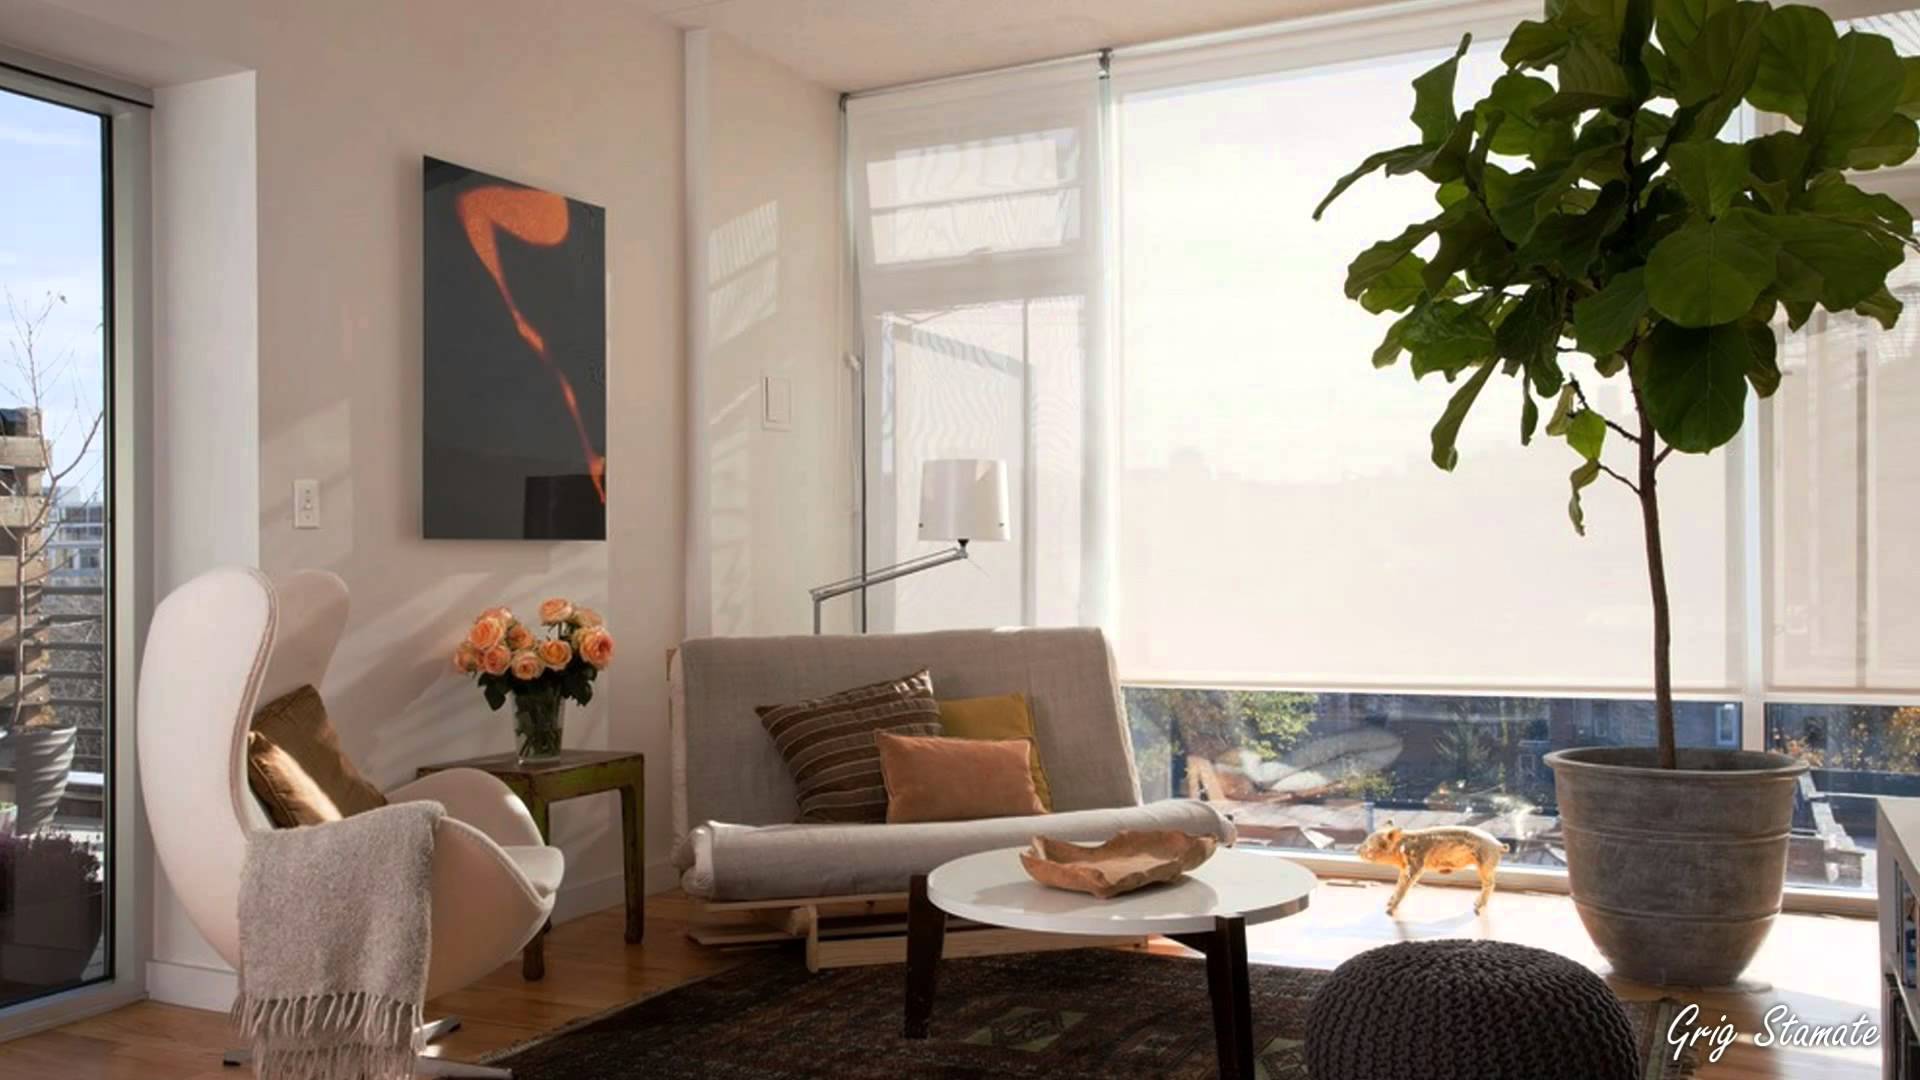 Feng Shui living room design ideas, a balanced lifestyle - youtube CFIUMTDyoutube